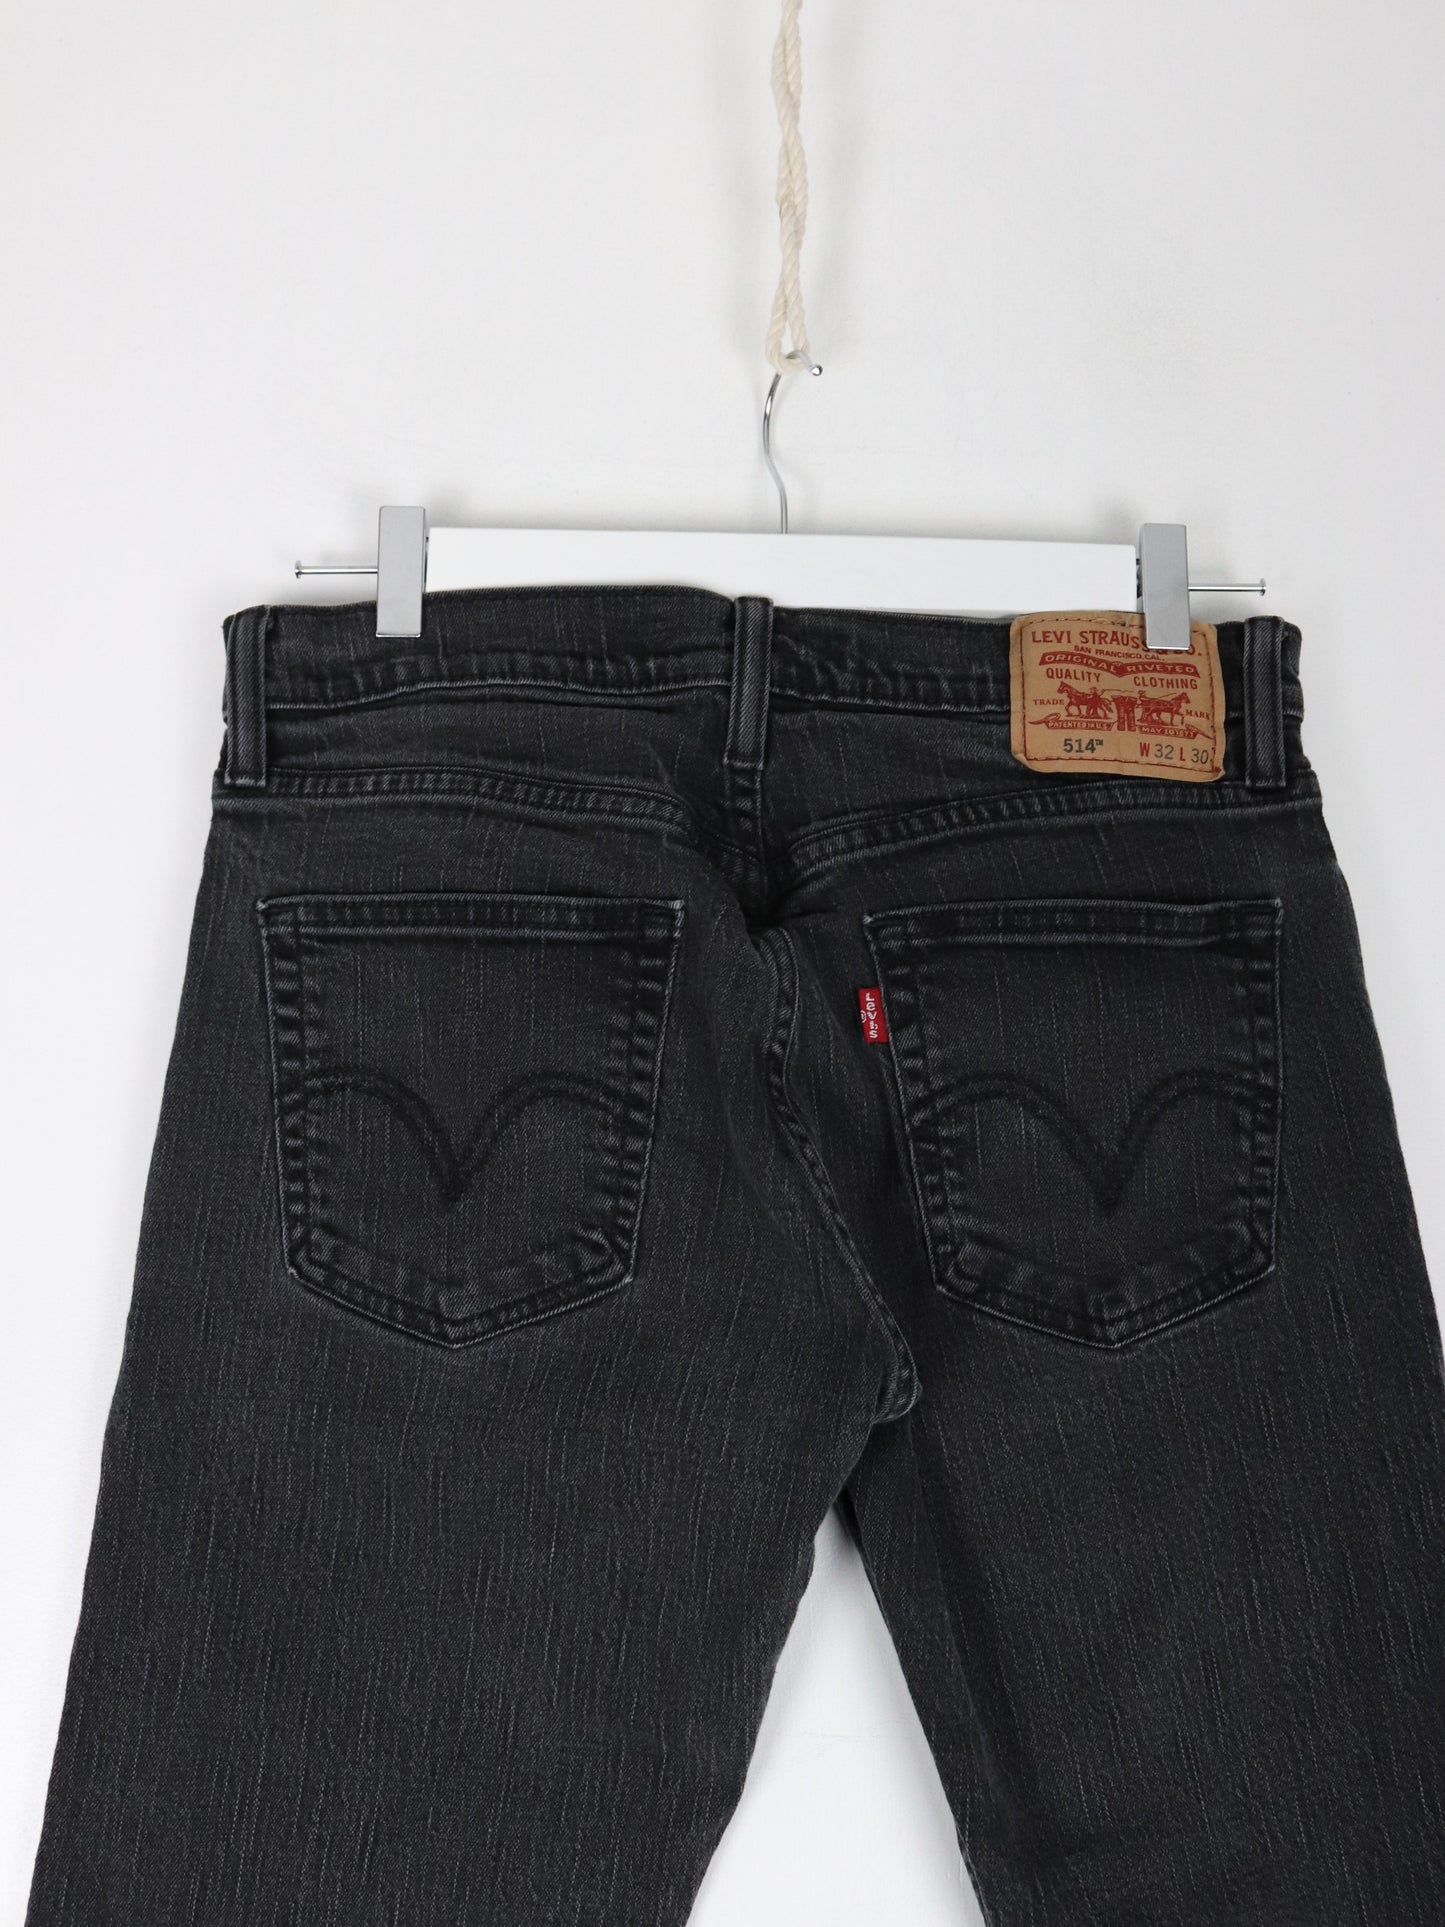 Vintage Levi's Pants Fits Mens 30 x 30 Black Denim Jeans Slim Straight